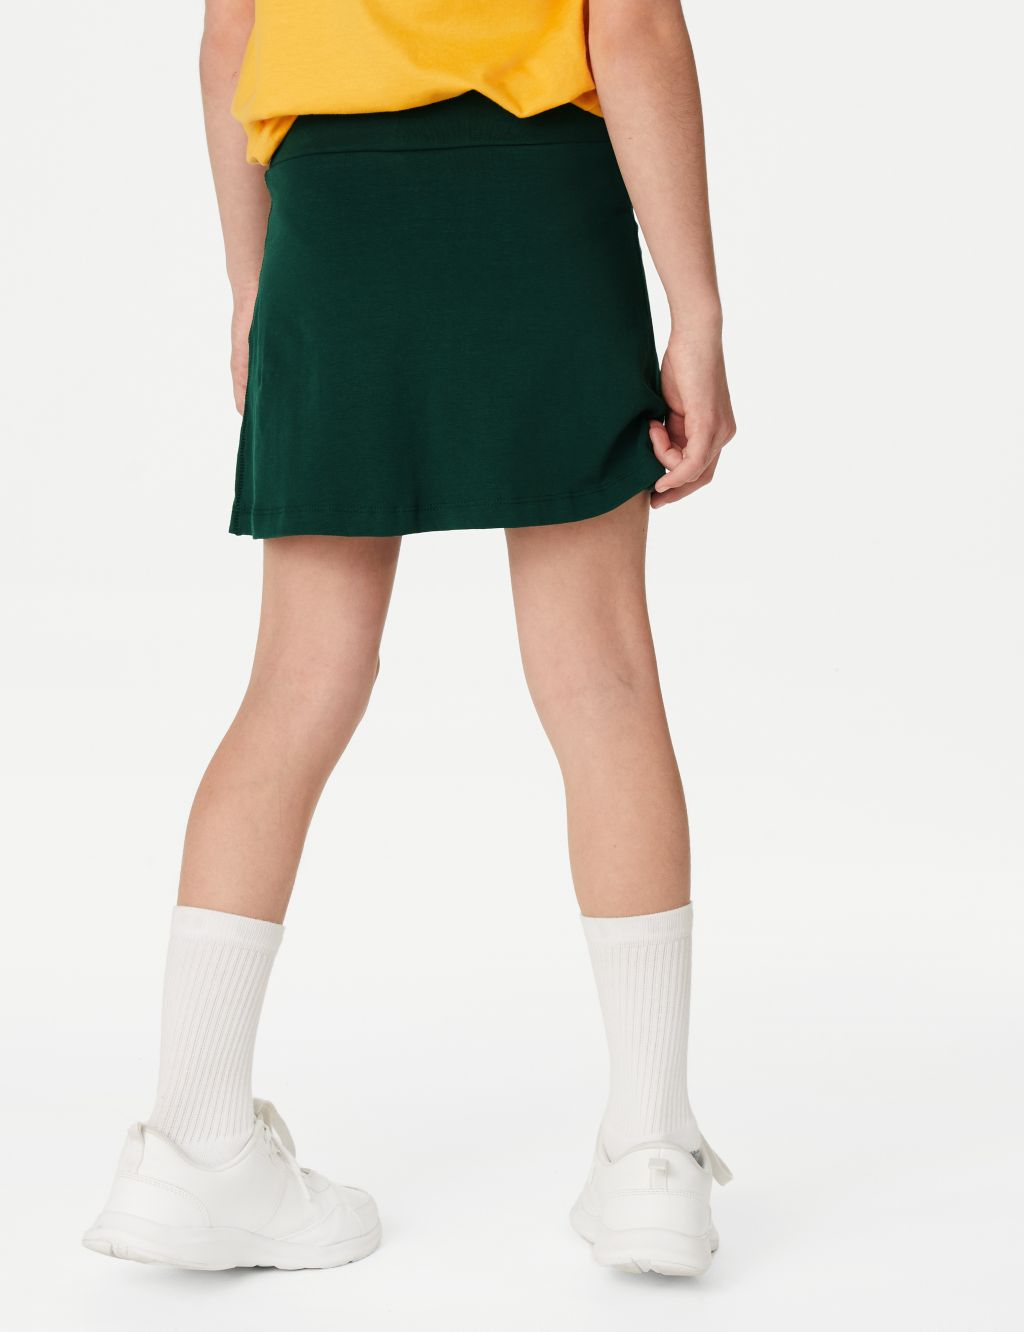 Girls' Cotton with Stretch Sports Skorts (2-16 Yrs) image 4